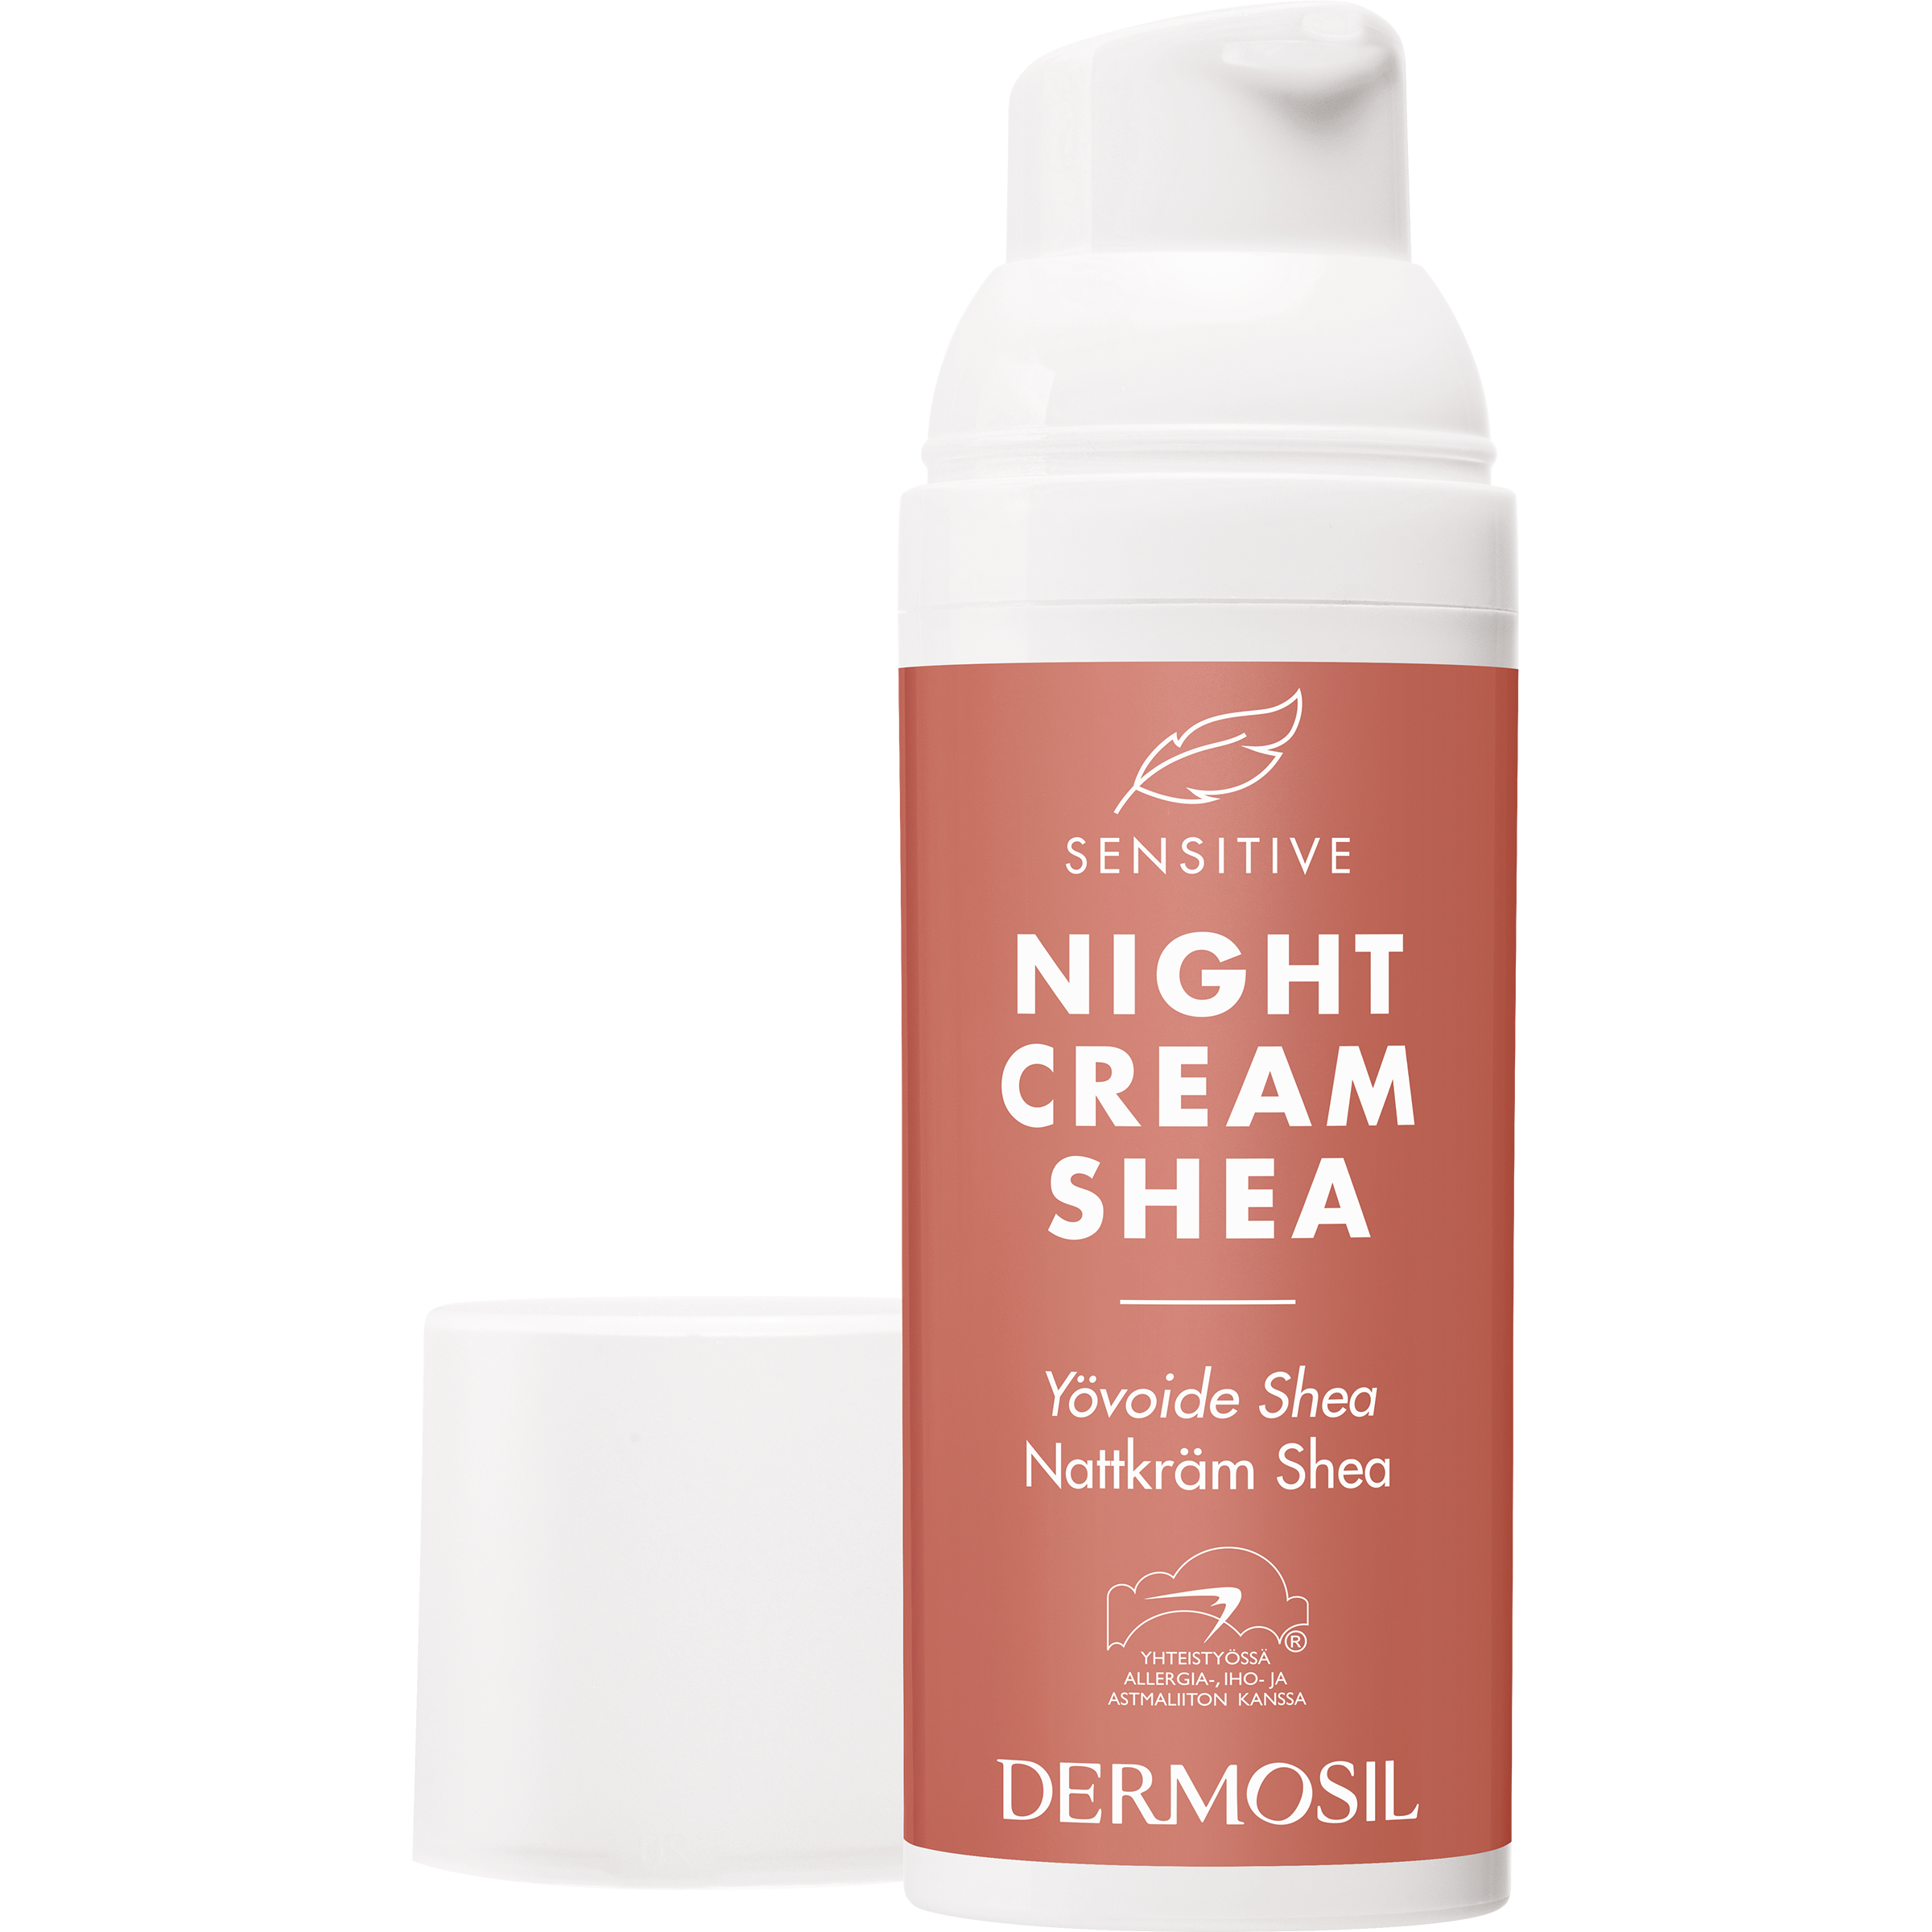 Moisturising night cream for sensitive, dry and atopic skin - Dermosil